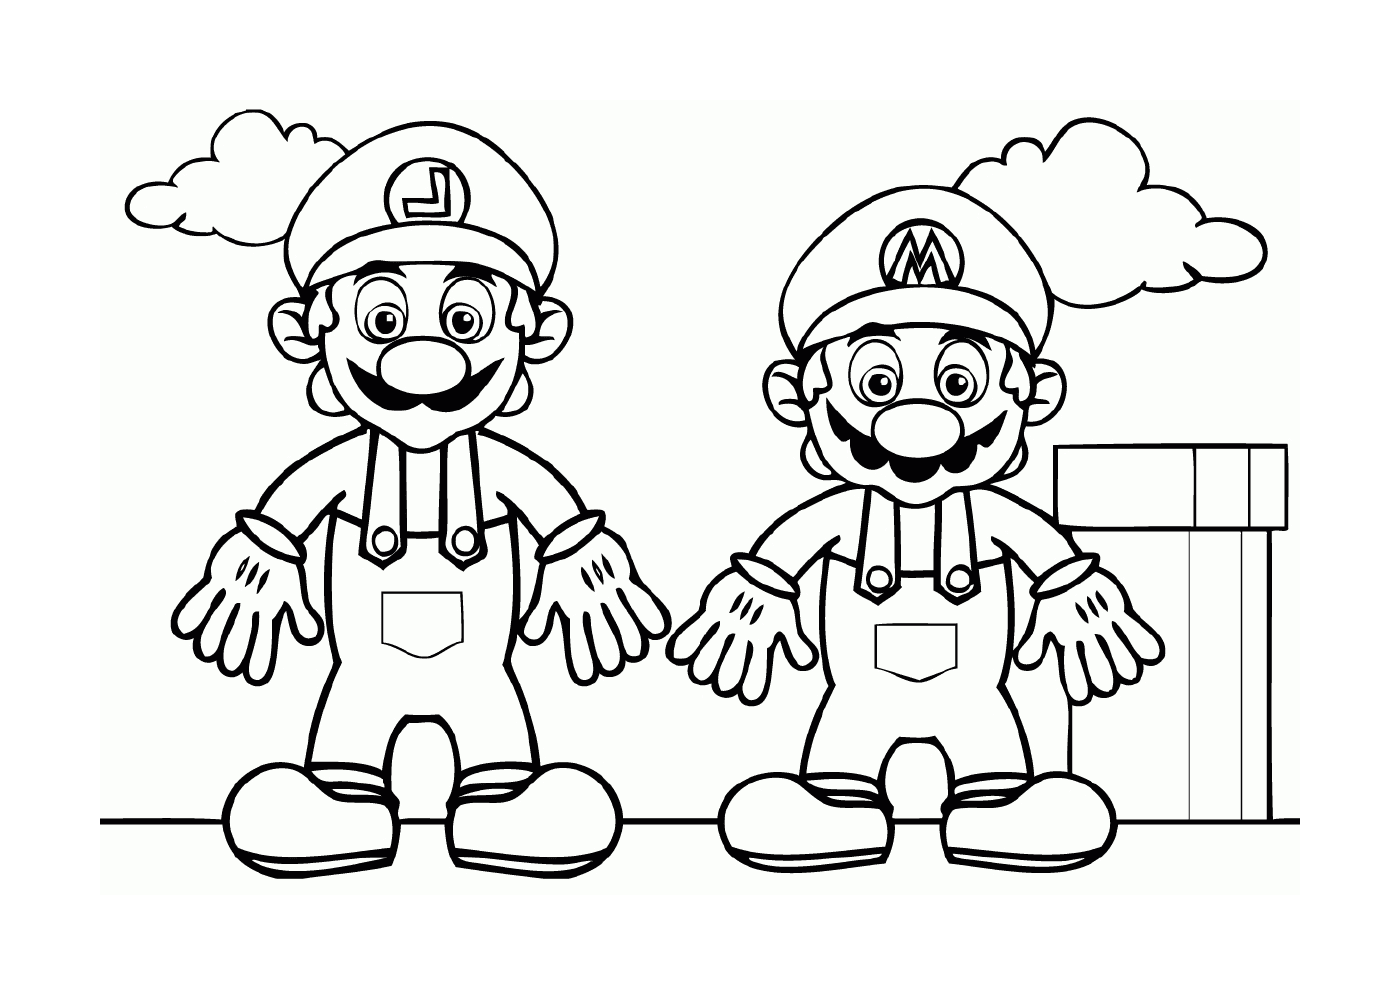  Mario e Luigi, due famosi fratelli 